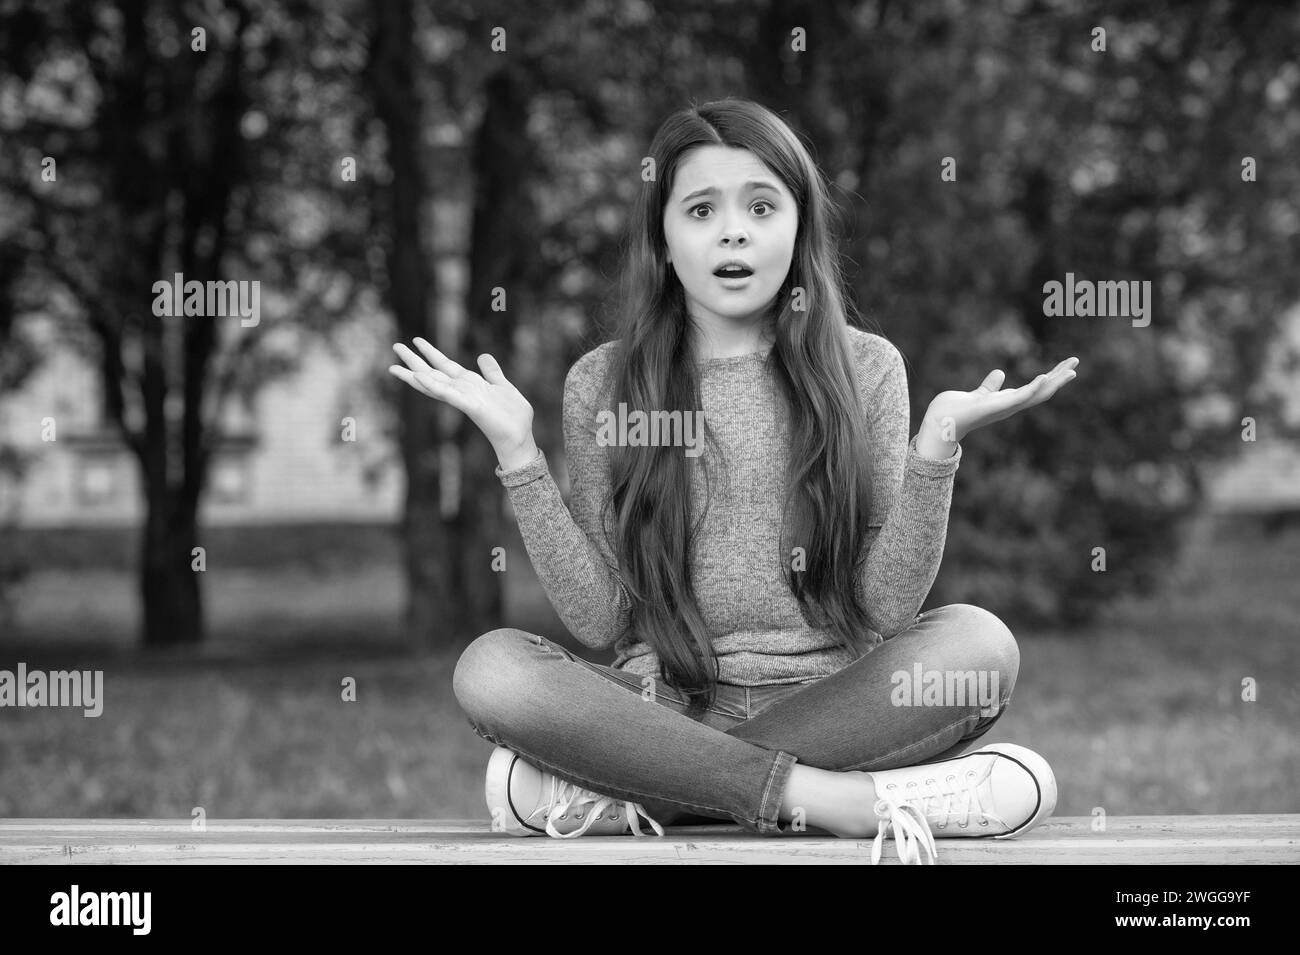 Shocked teenage girl shrugging shoulders sitting legs crossed on bench outdoors, shock Stock Photo